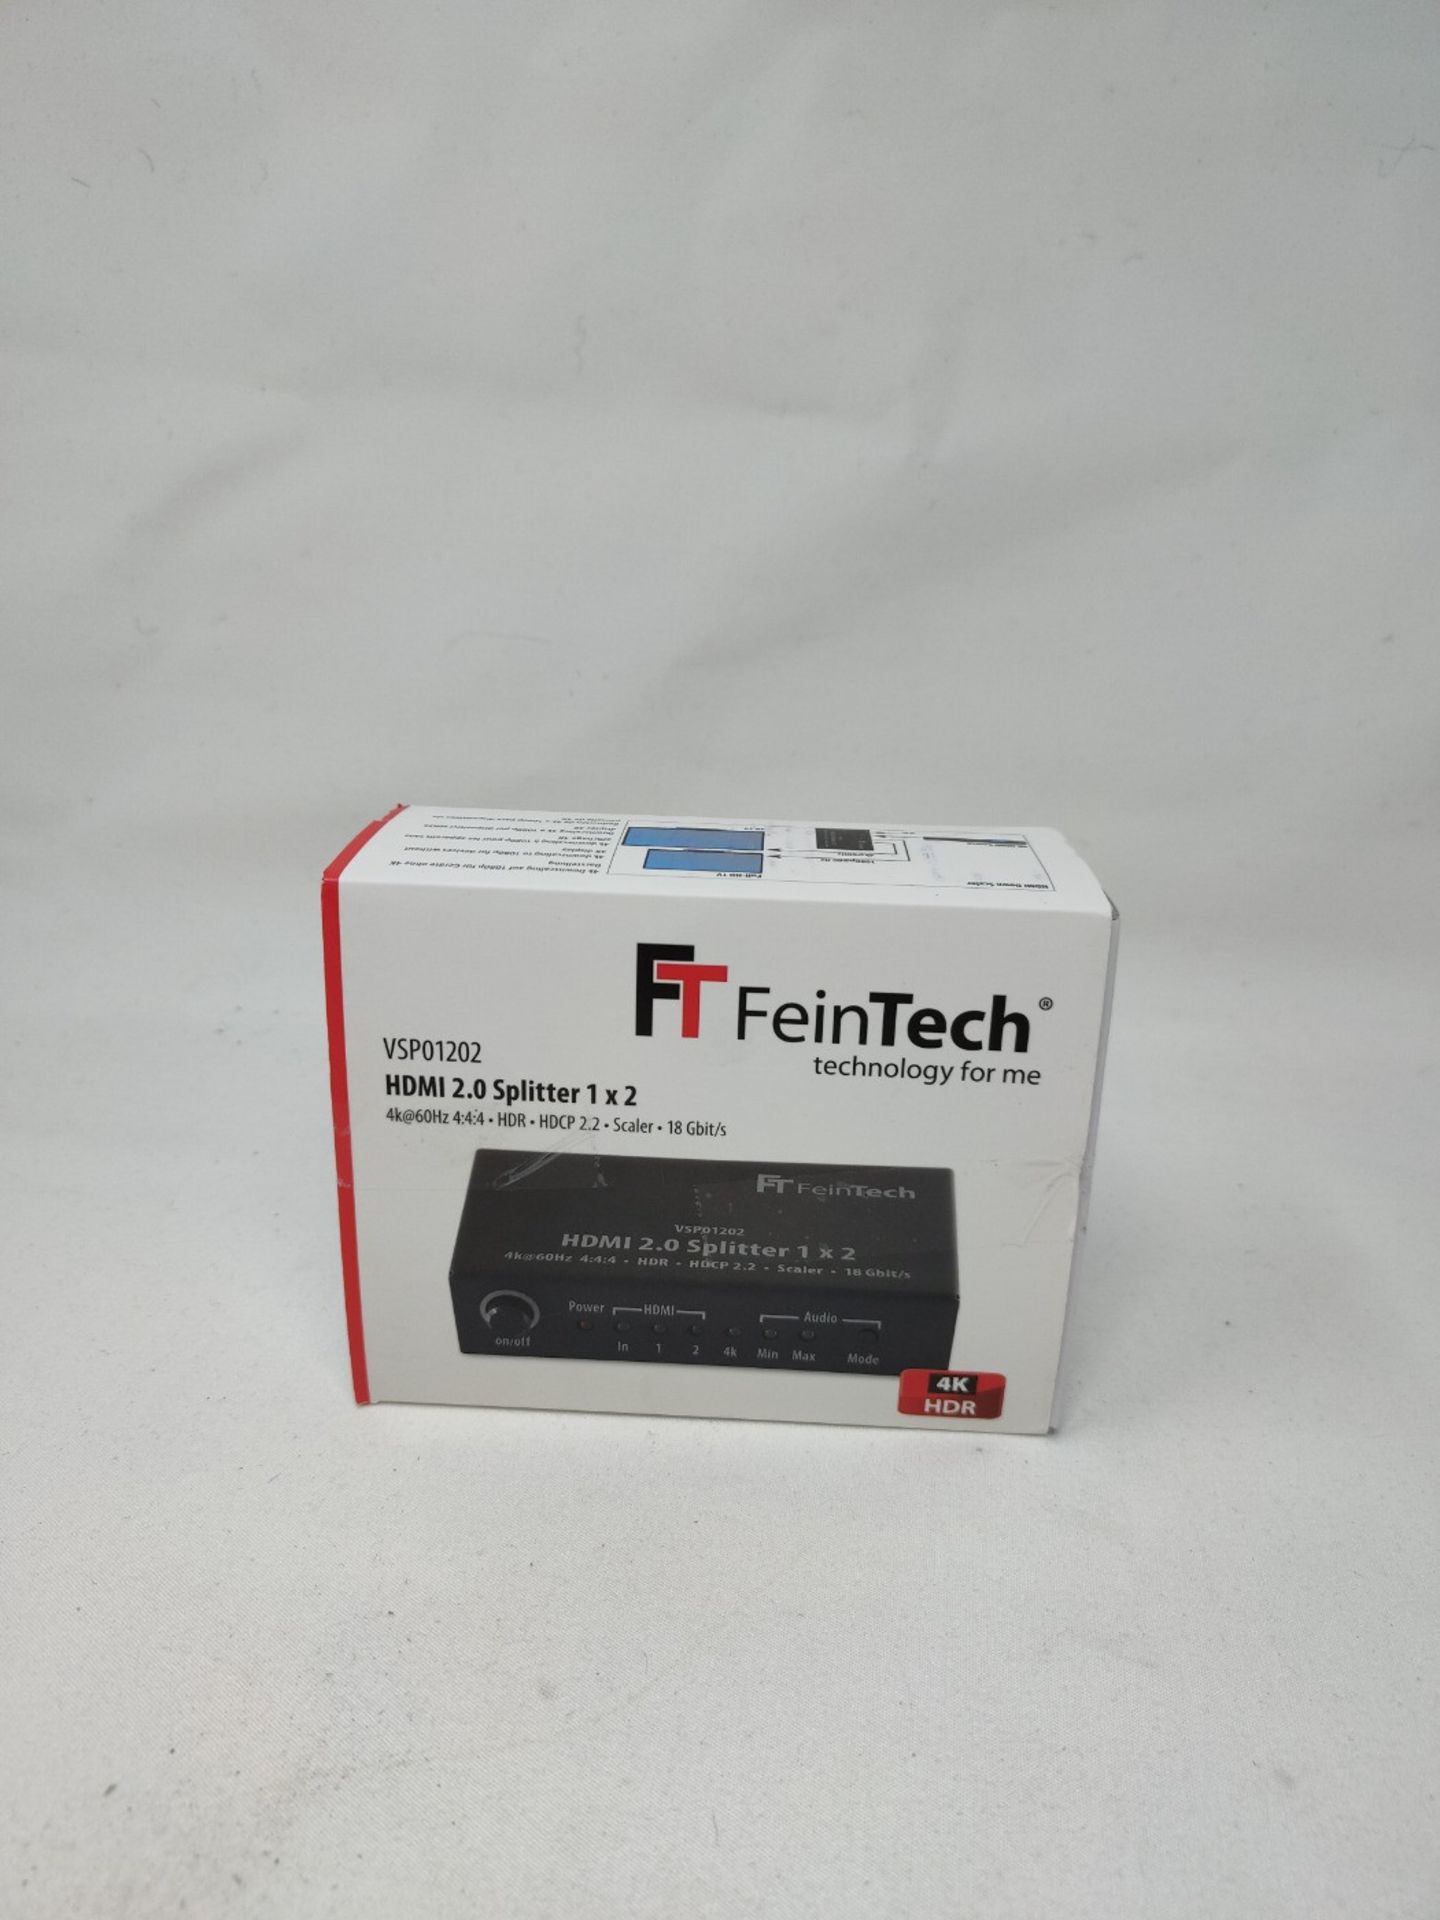 FeinTech VSP01202 HDMI 2.0 Splitter 1x2 with 4K HDR Down-Scaler Audio EDID Black - Image 2 of 3